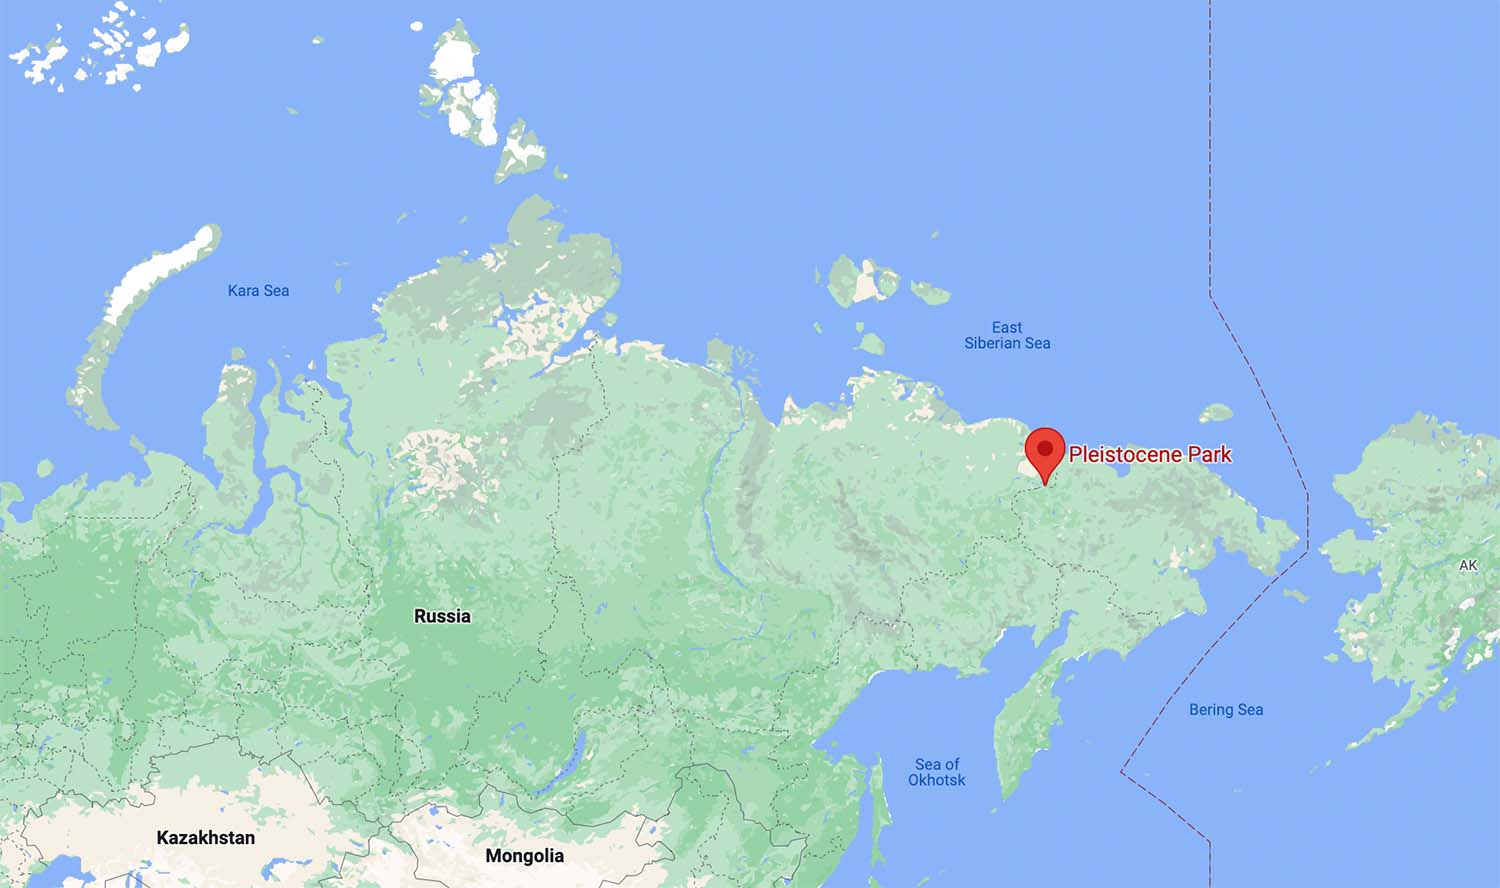 A screenshot of Google Maps showing Pleistocene Park in eastern Russia